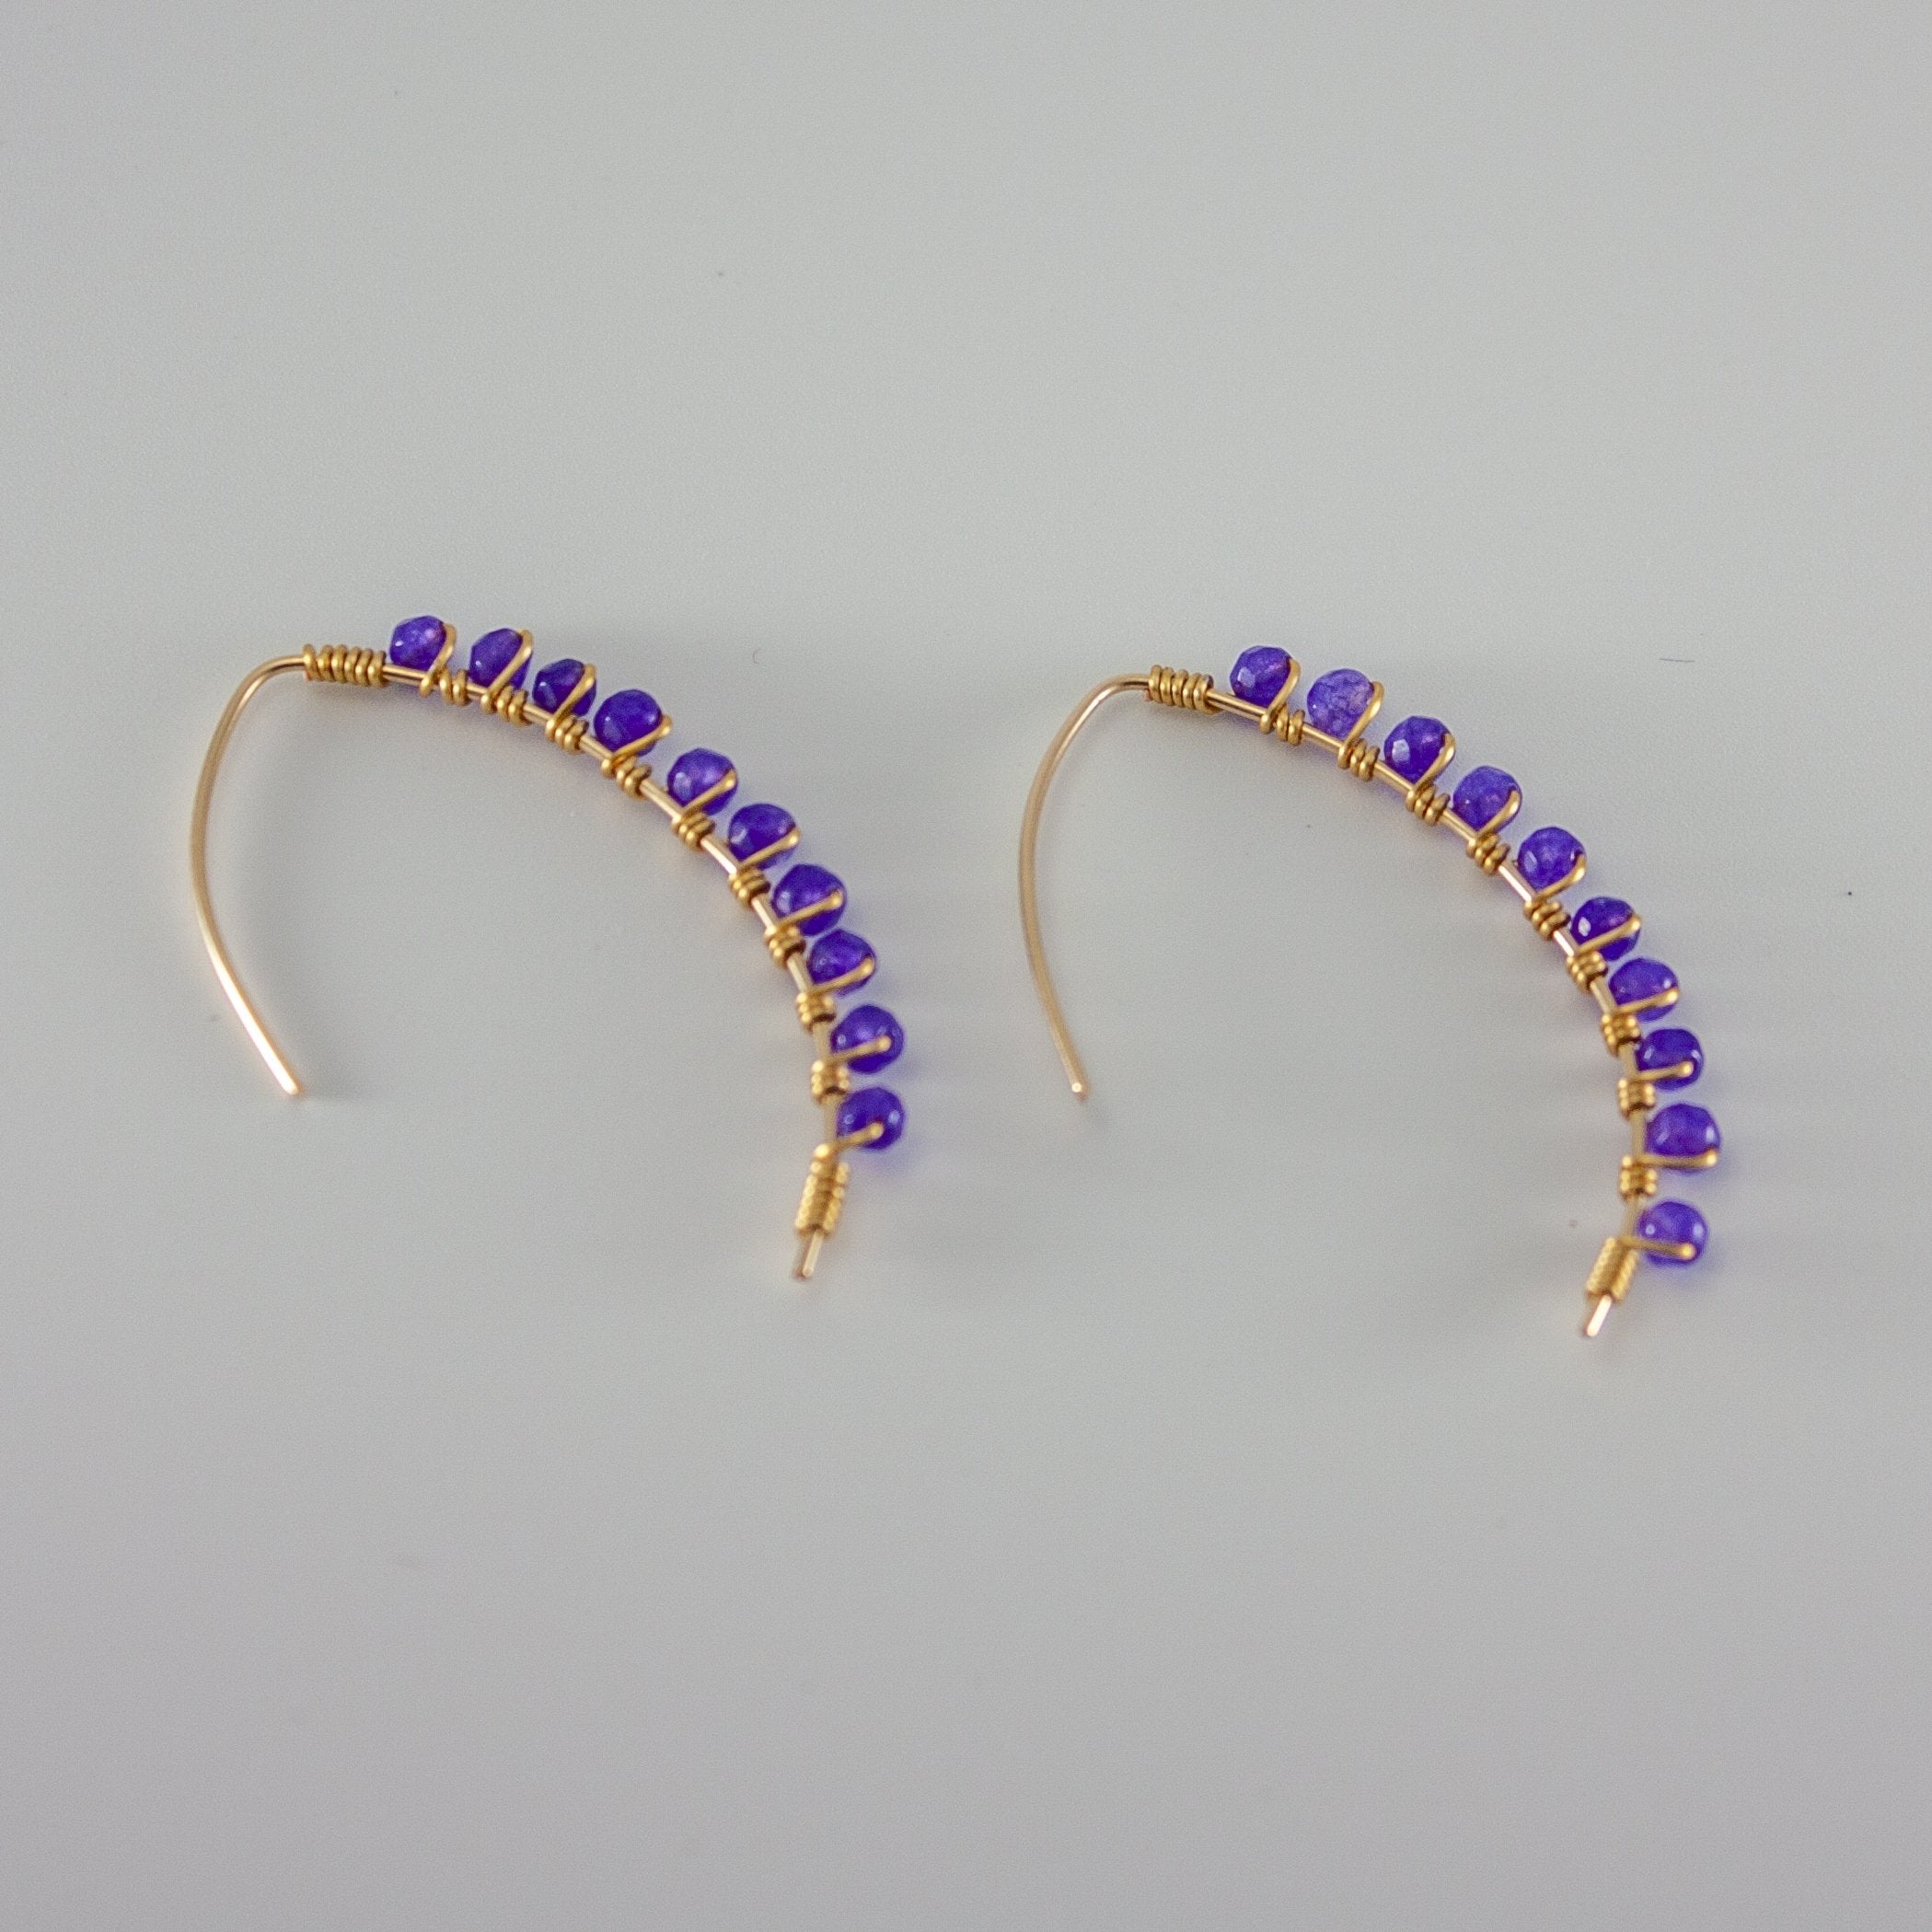 Beaded Amethyst Threader Earrings in 14K Gold Filled Wire Bijou Her